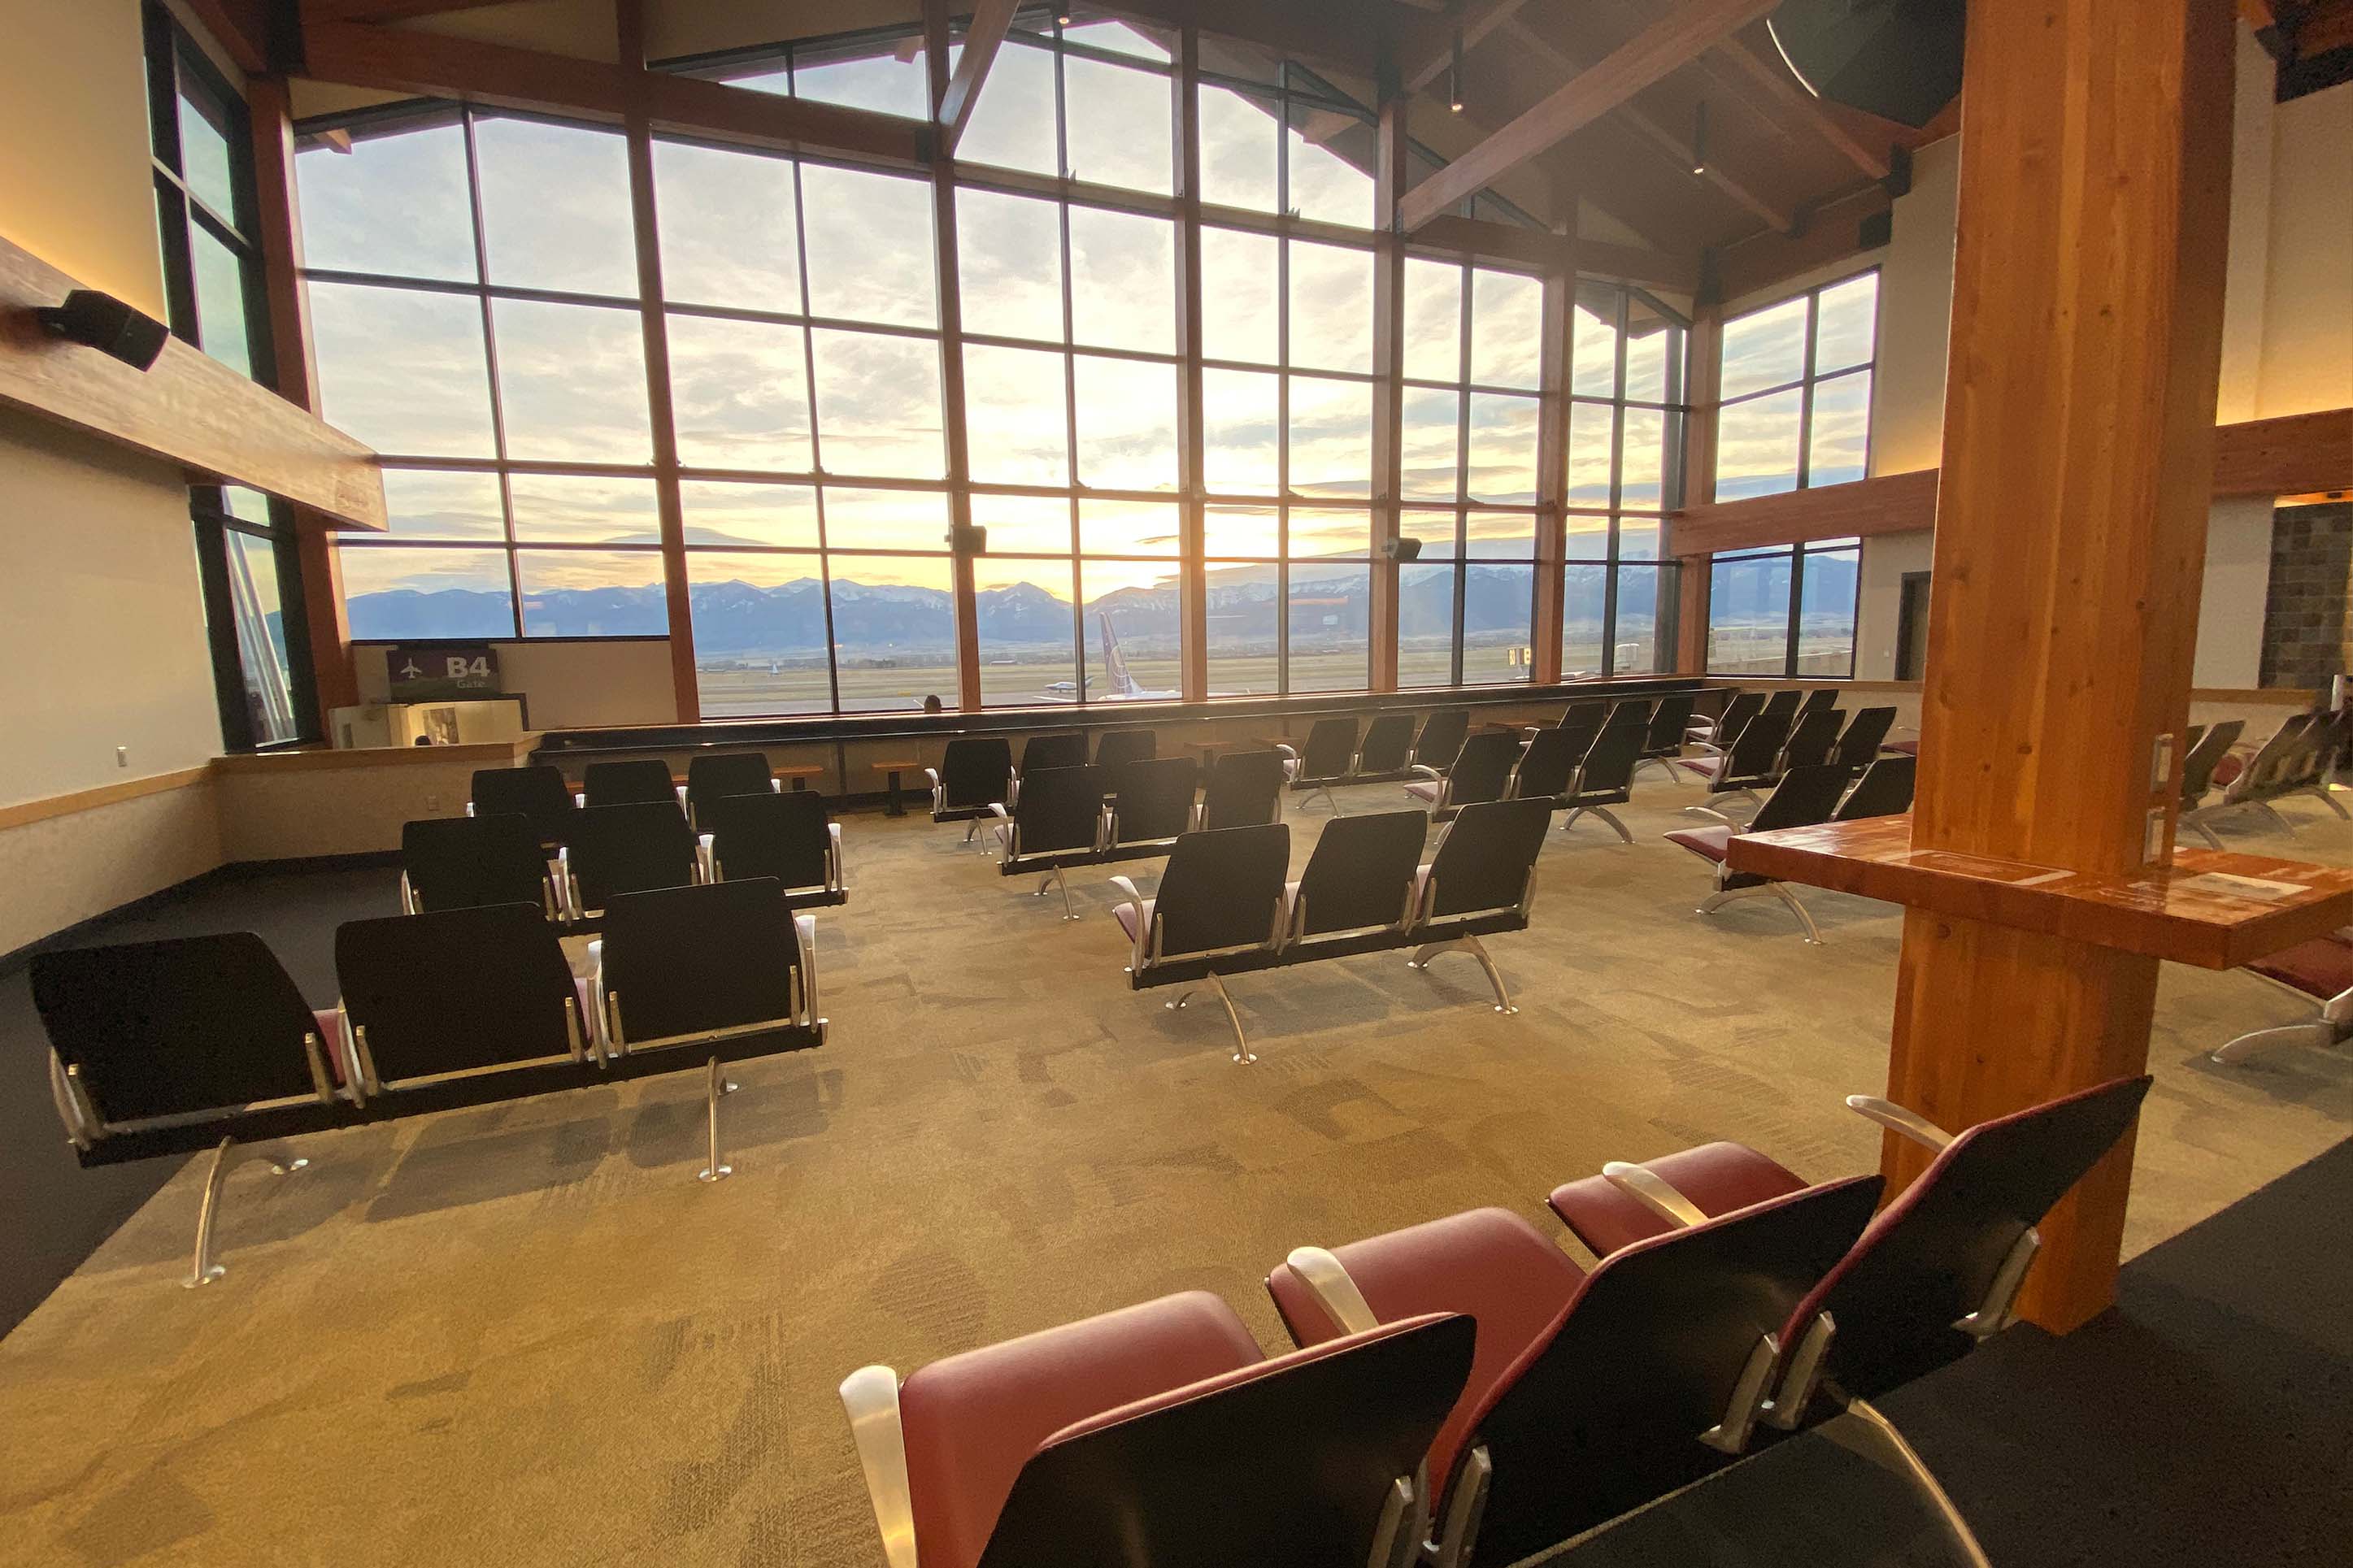 Interior shot of the views from Bozeman Yellowstone International Airport